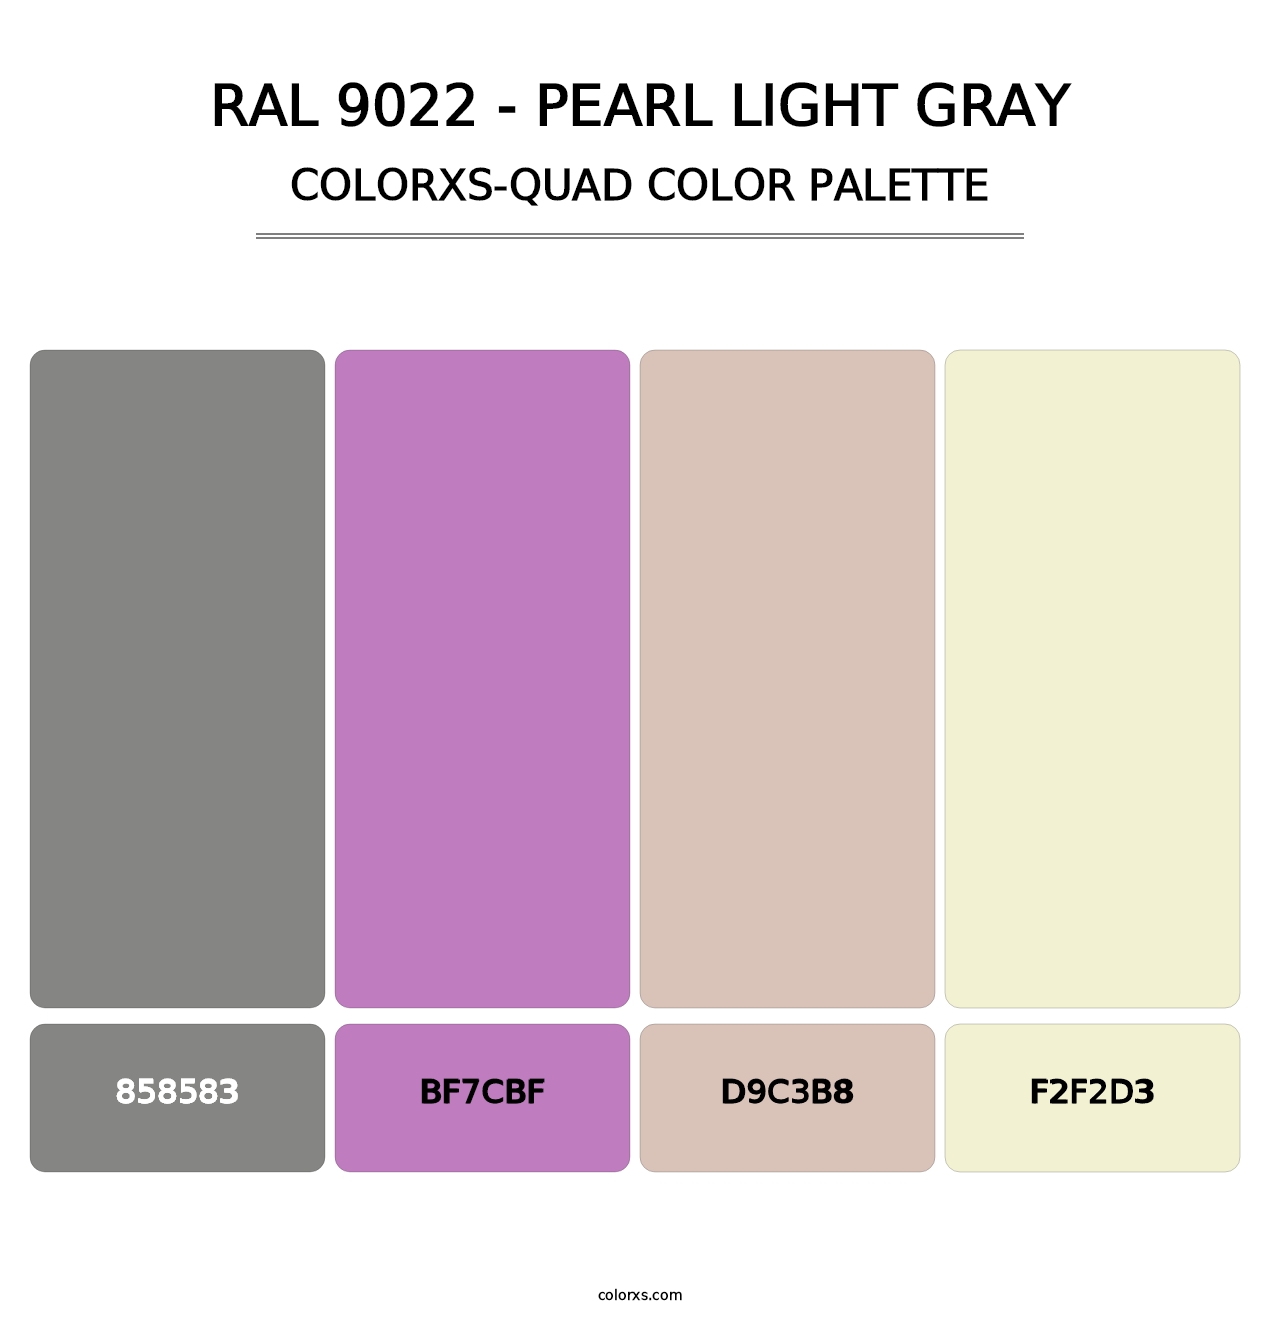 RAL 9022 - Pearl Light Gray - Colorxs Quad Palette